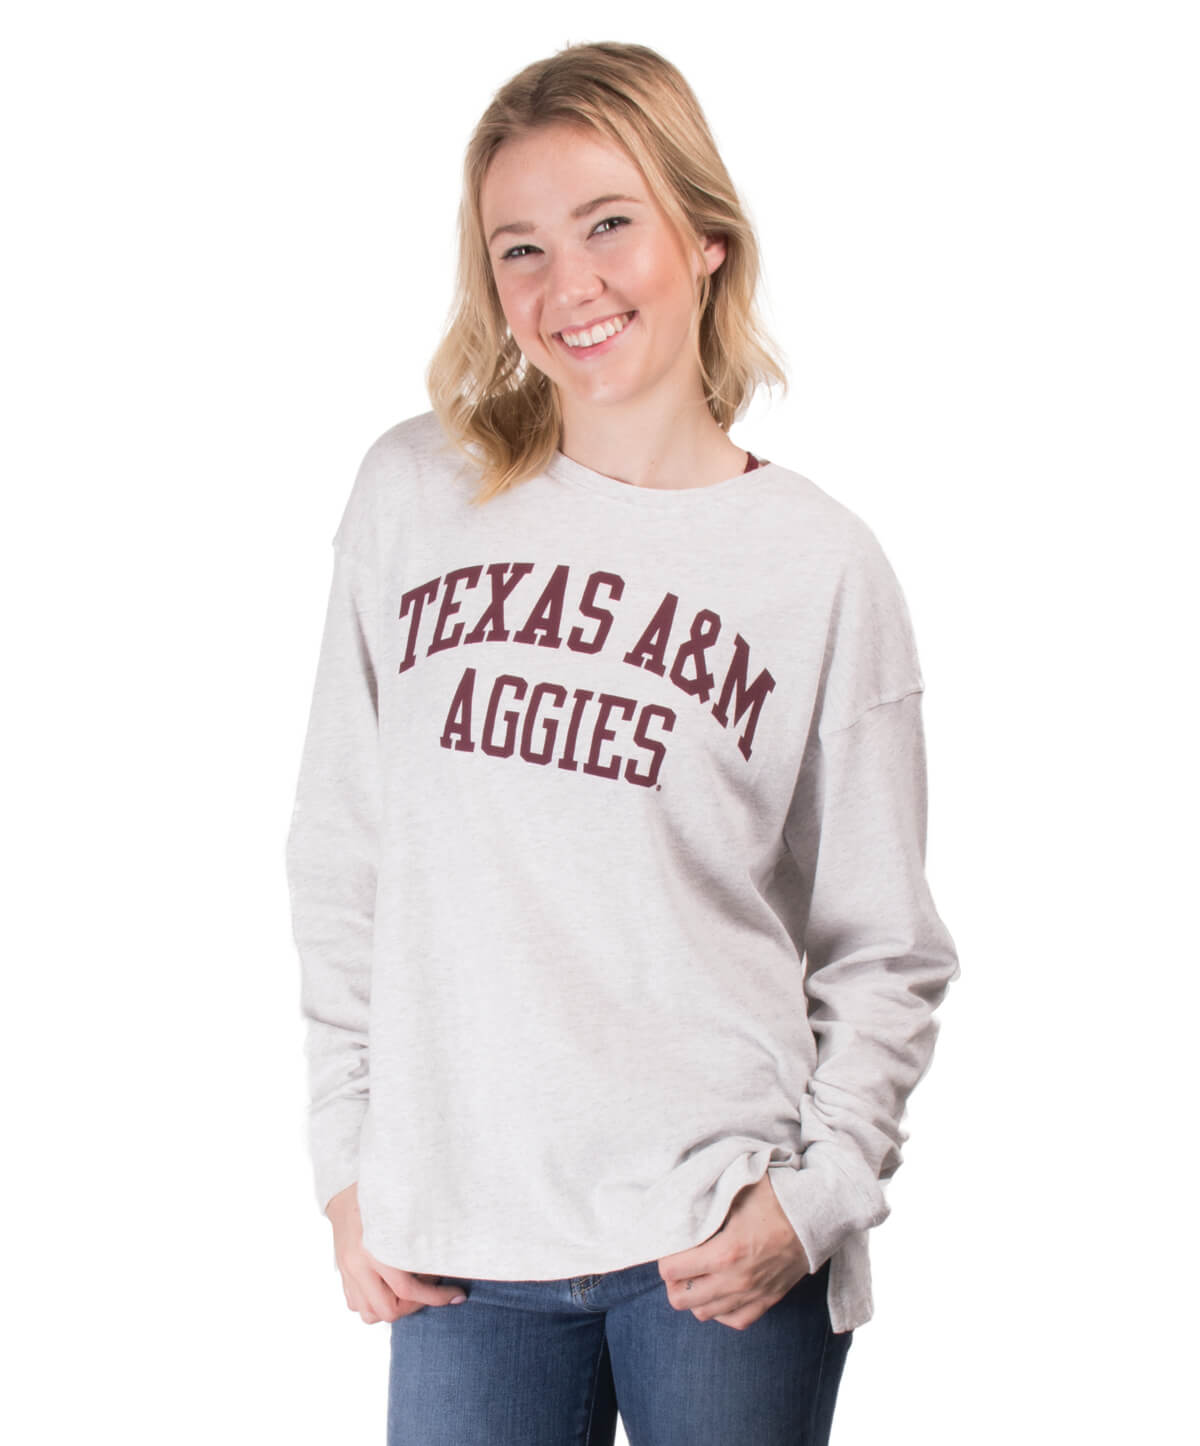 Texas A&M Women's Clothesline Cotton Long Sleeve T-Shirt